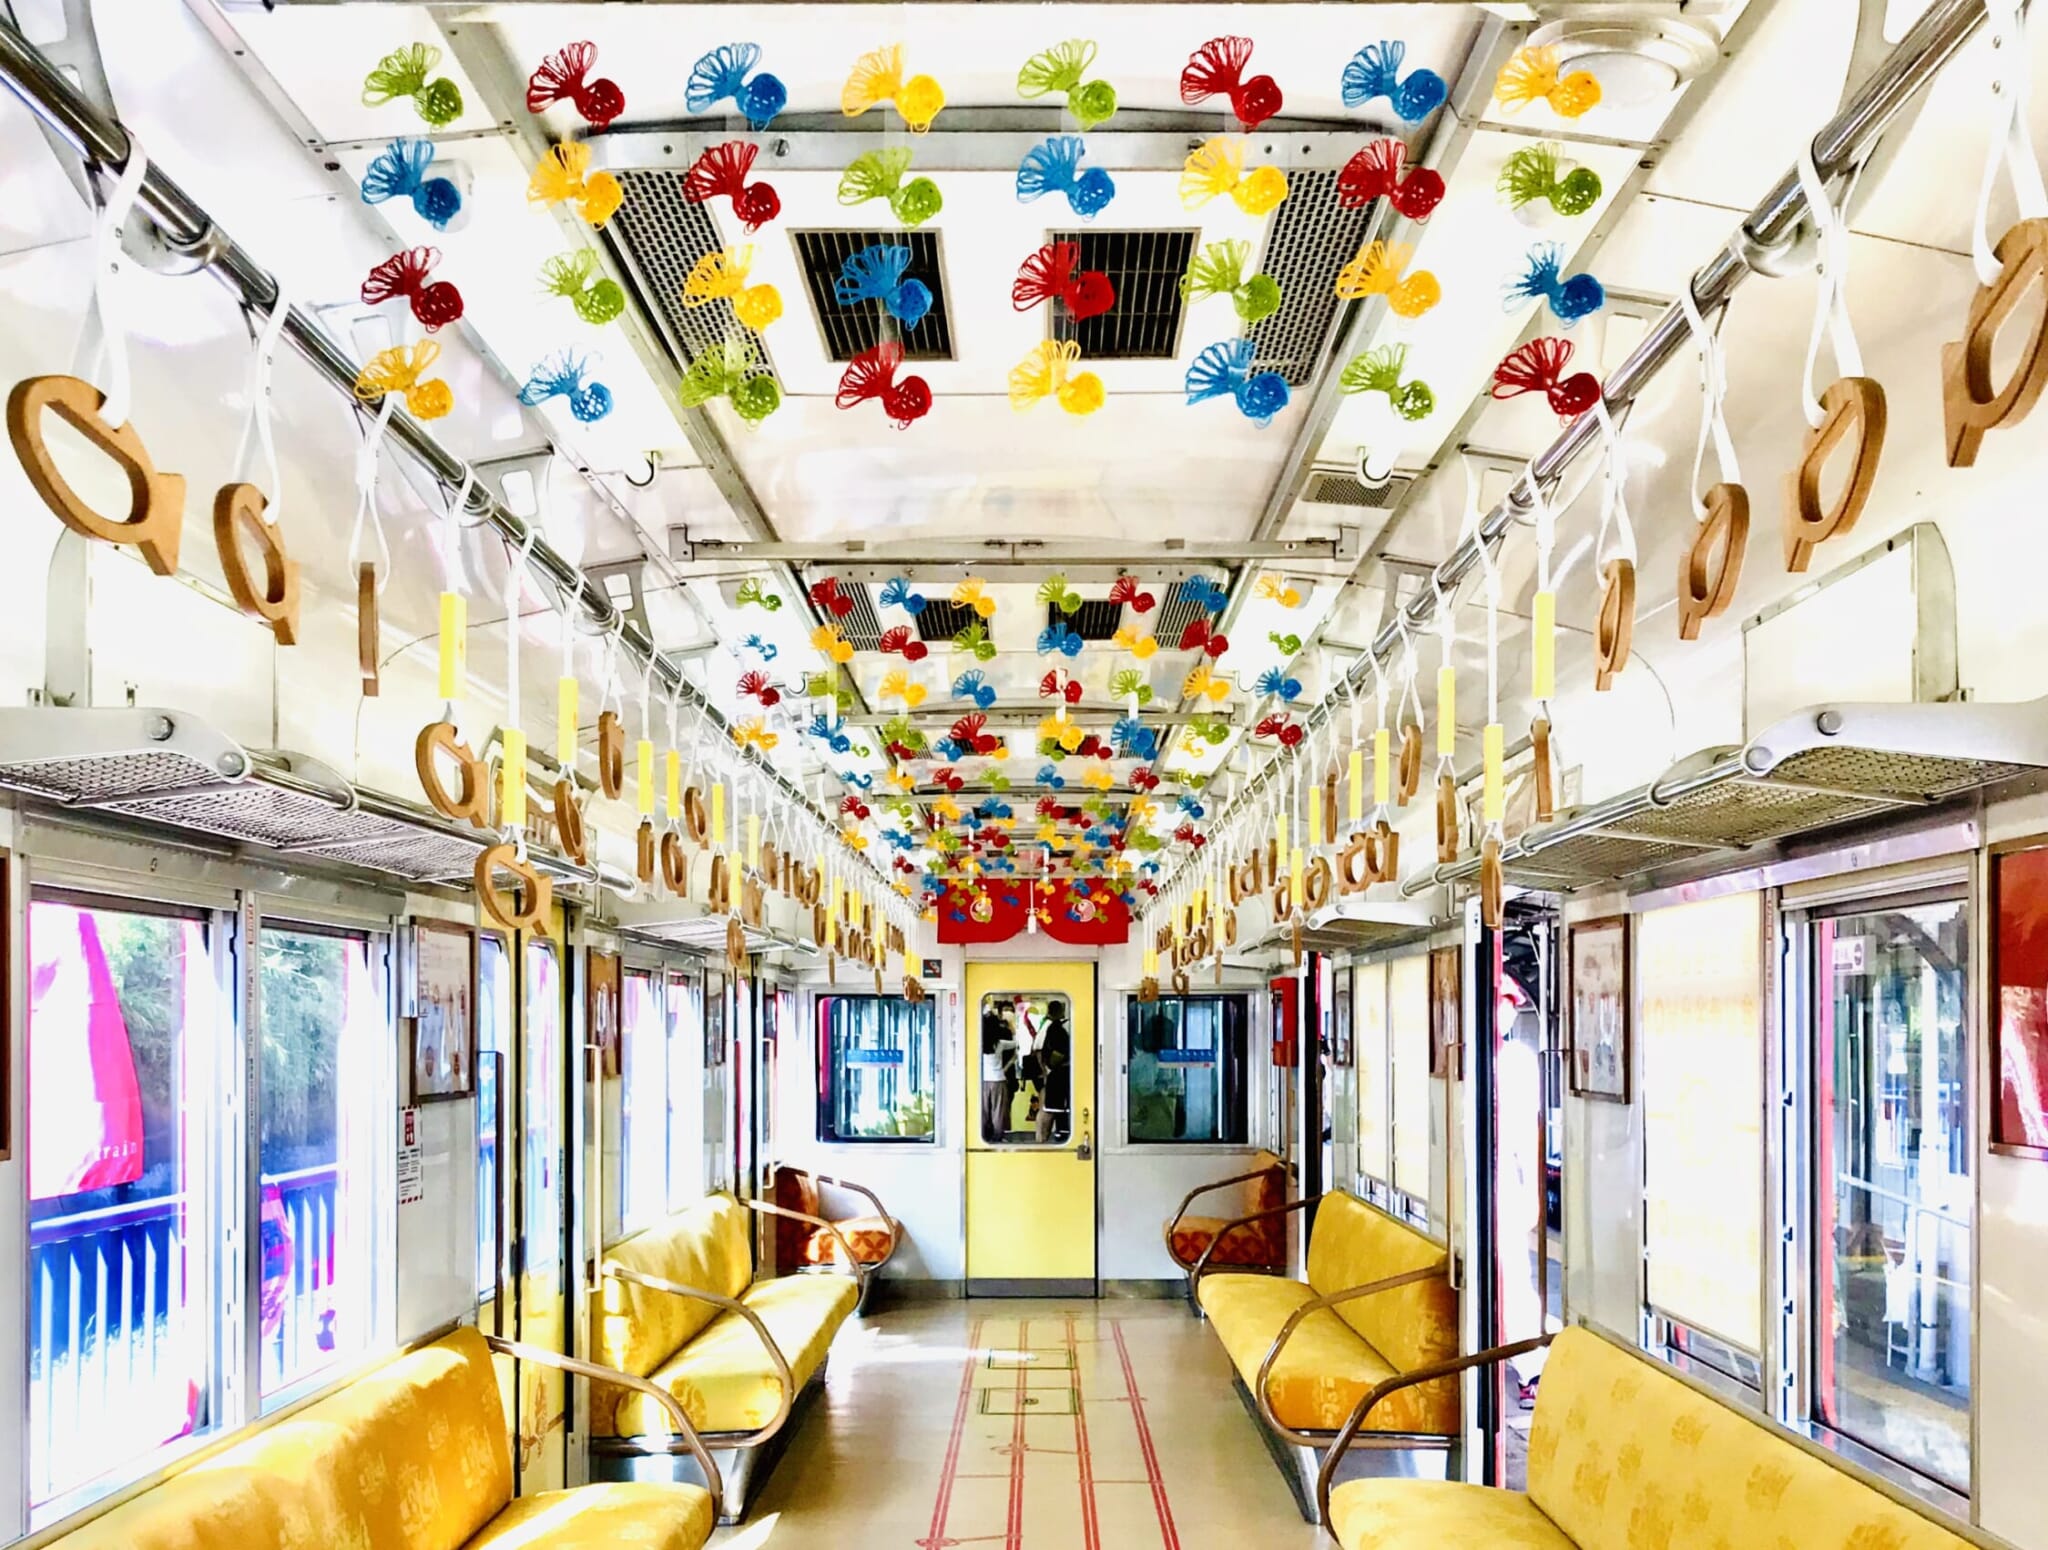 Cute train inside